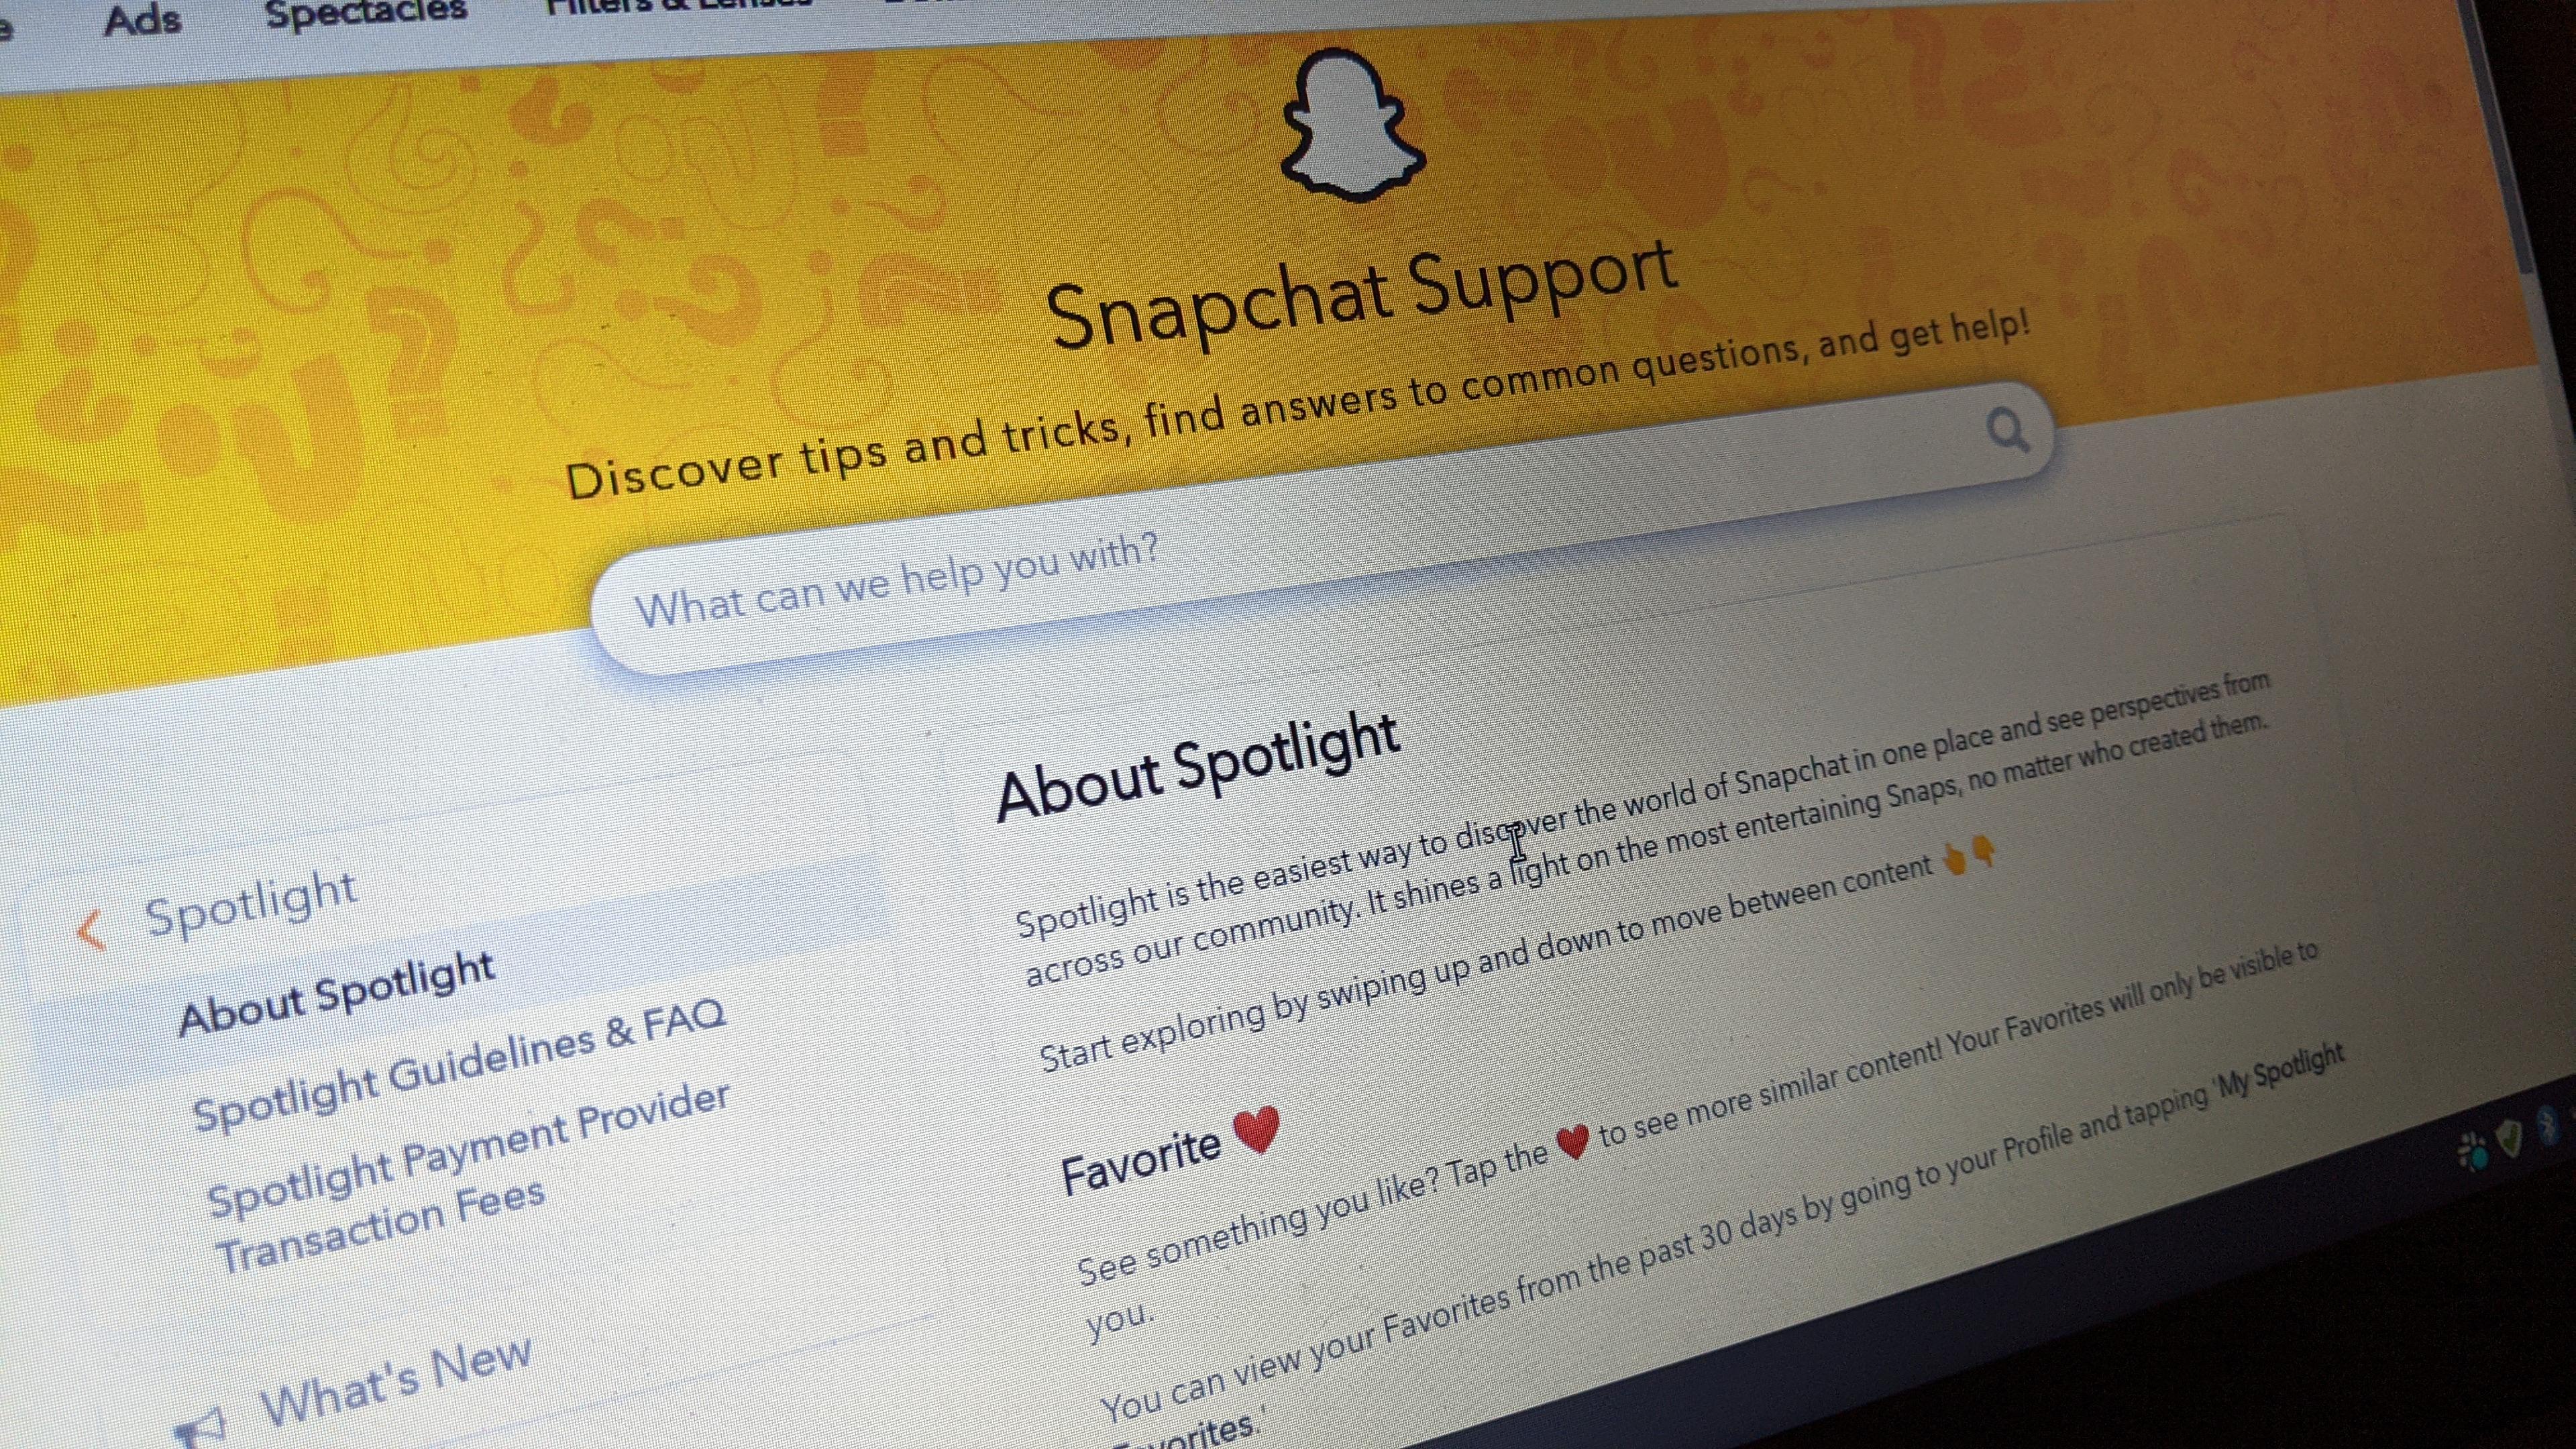 Snapchat Spotlight Payout